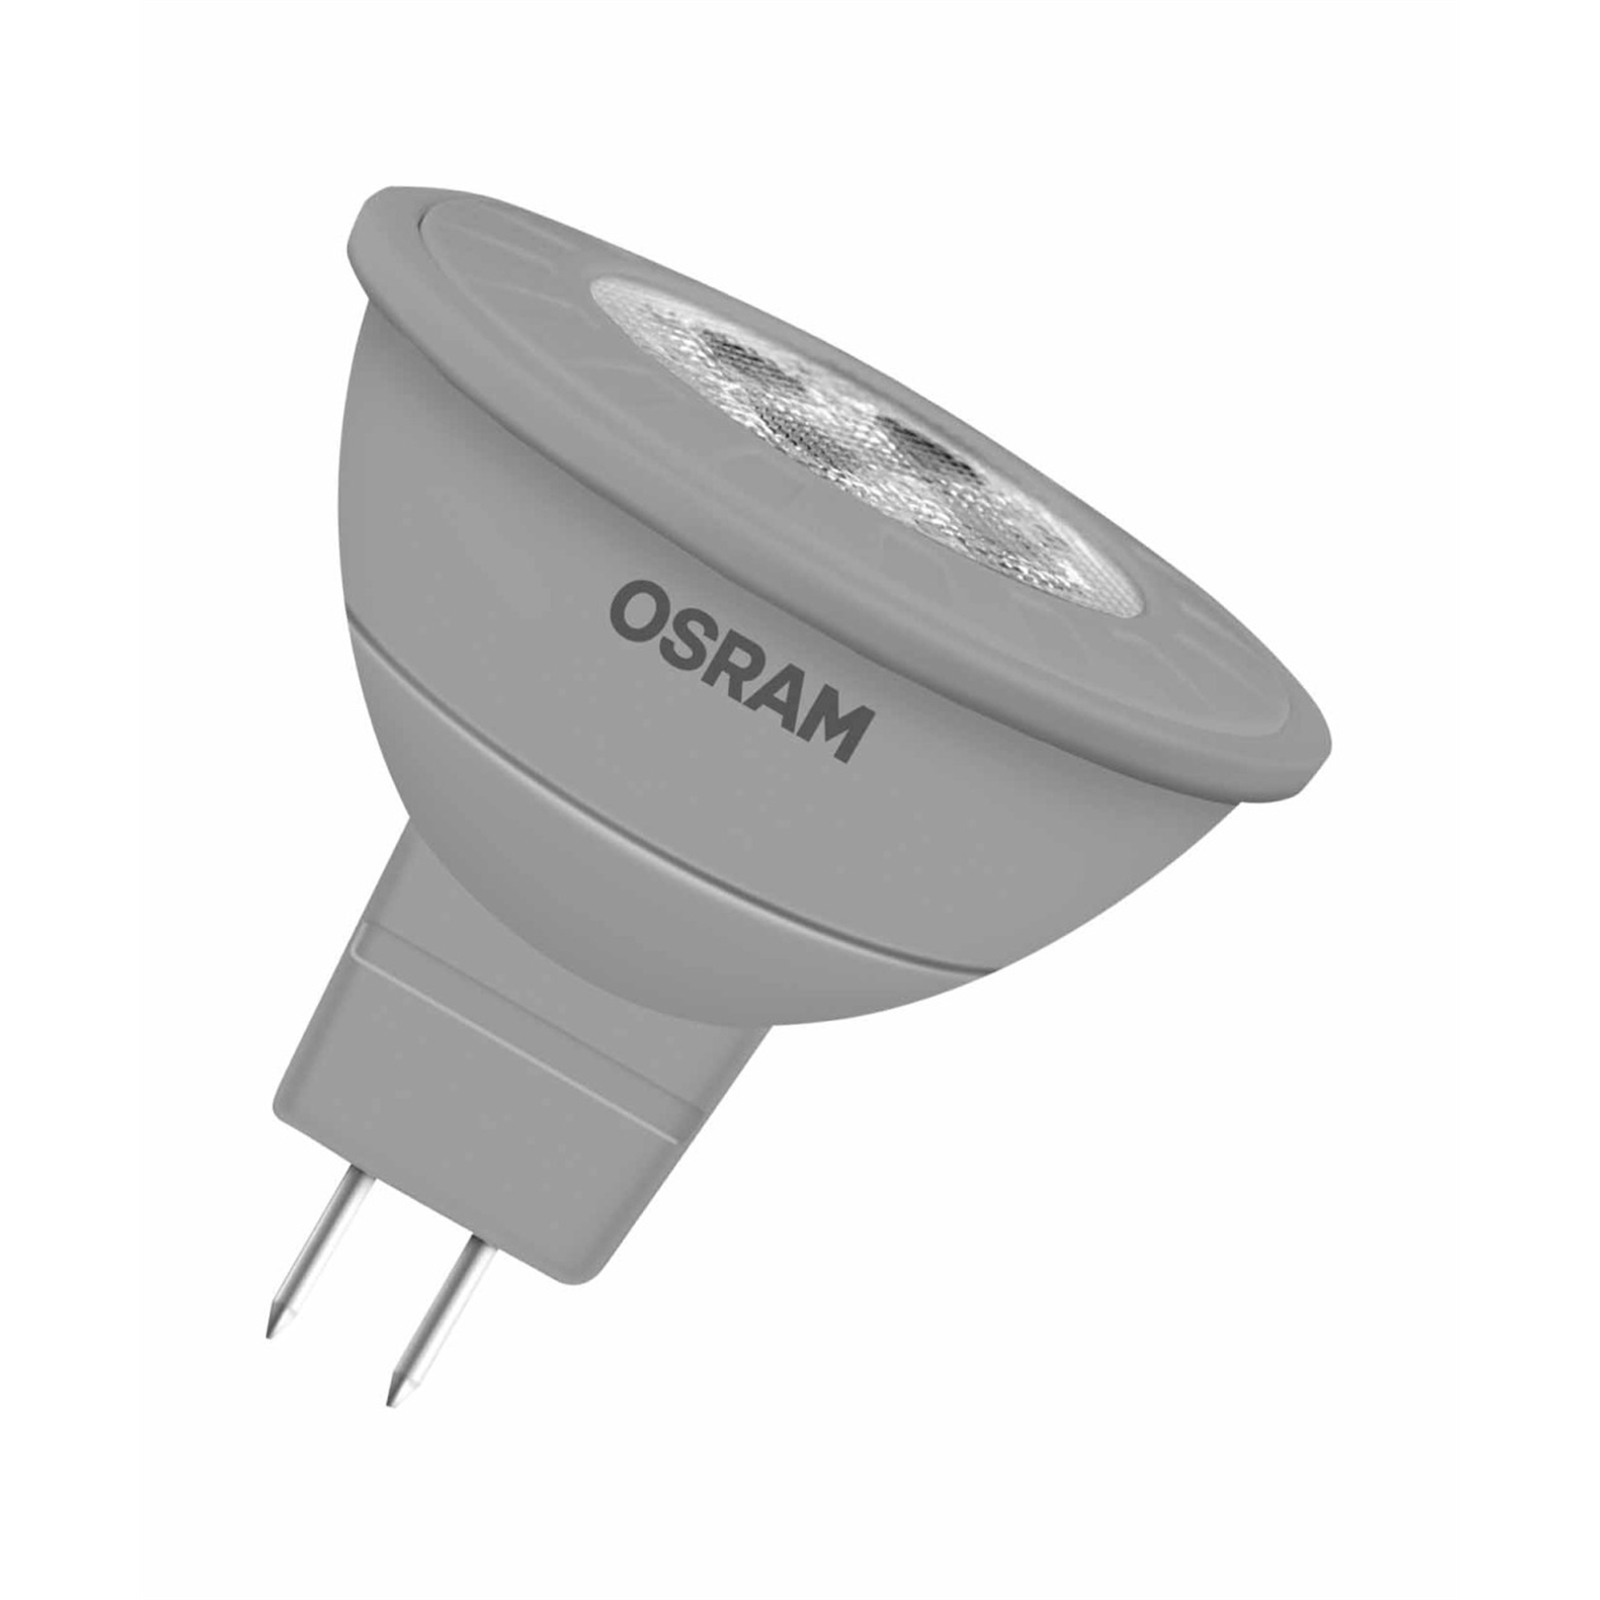 Osram 5W LED Daylight MR16 Globe